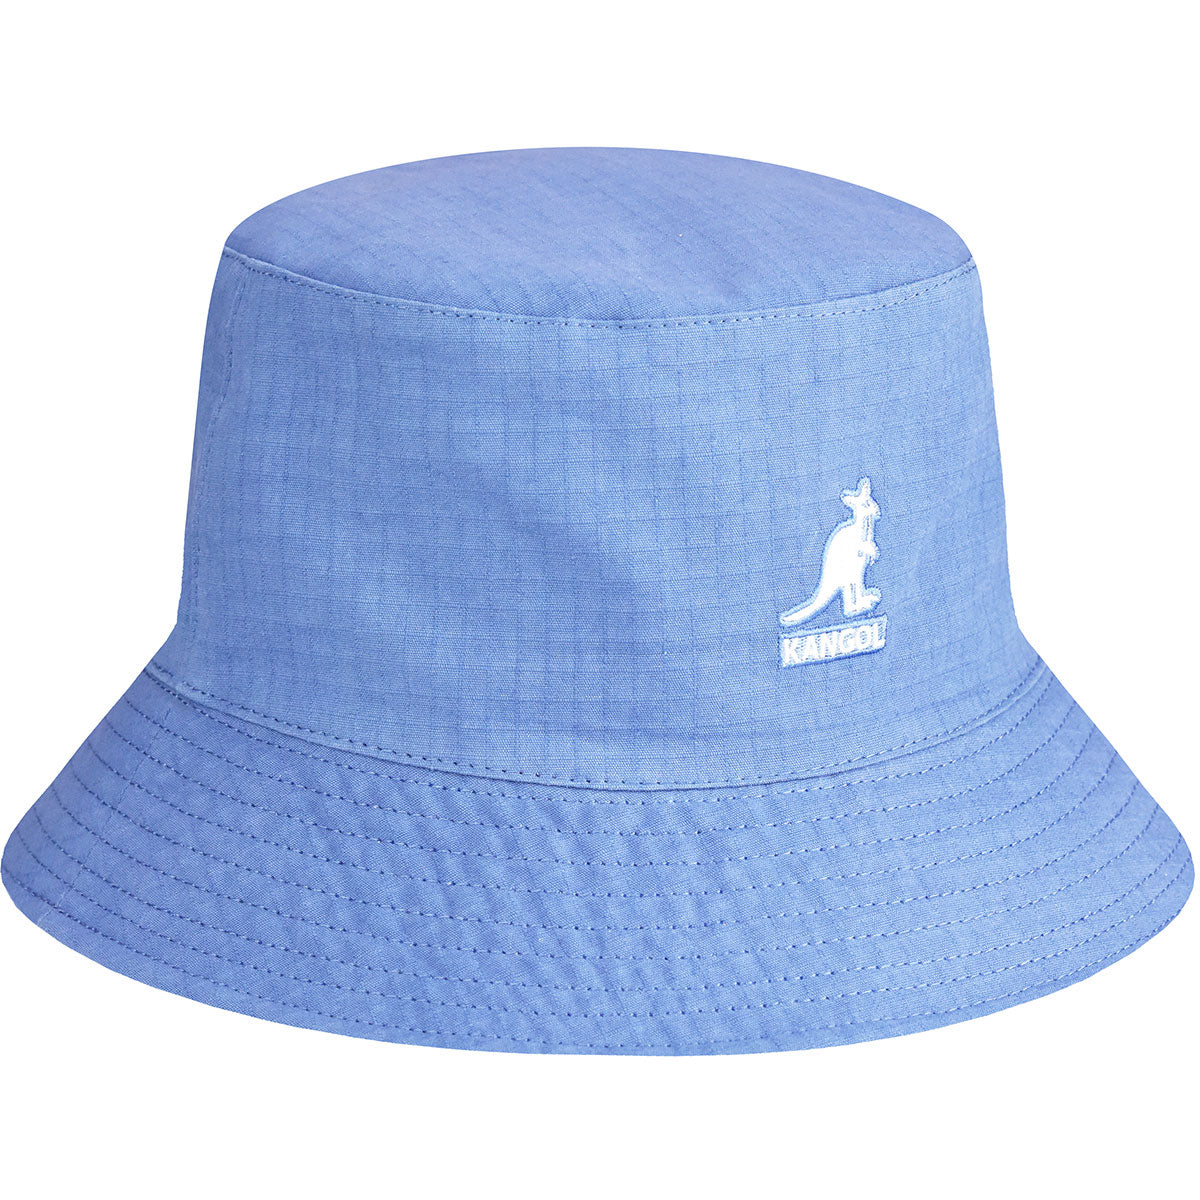 RIPSTOP ESSENTIAL REV BUCKET HAT - LIGHT BLUE I KANGOL LIGHT BLUE / M